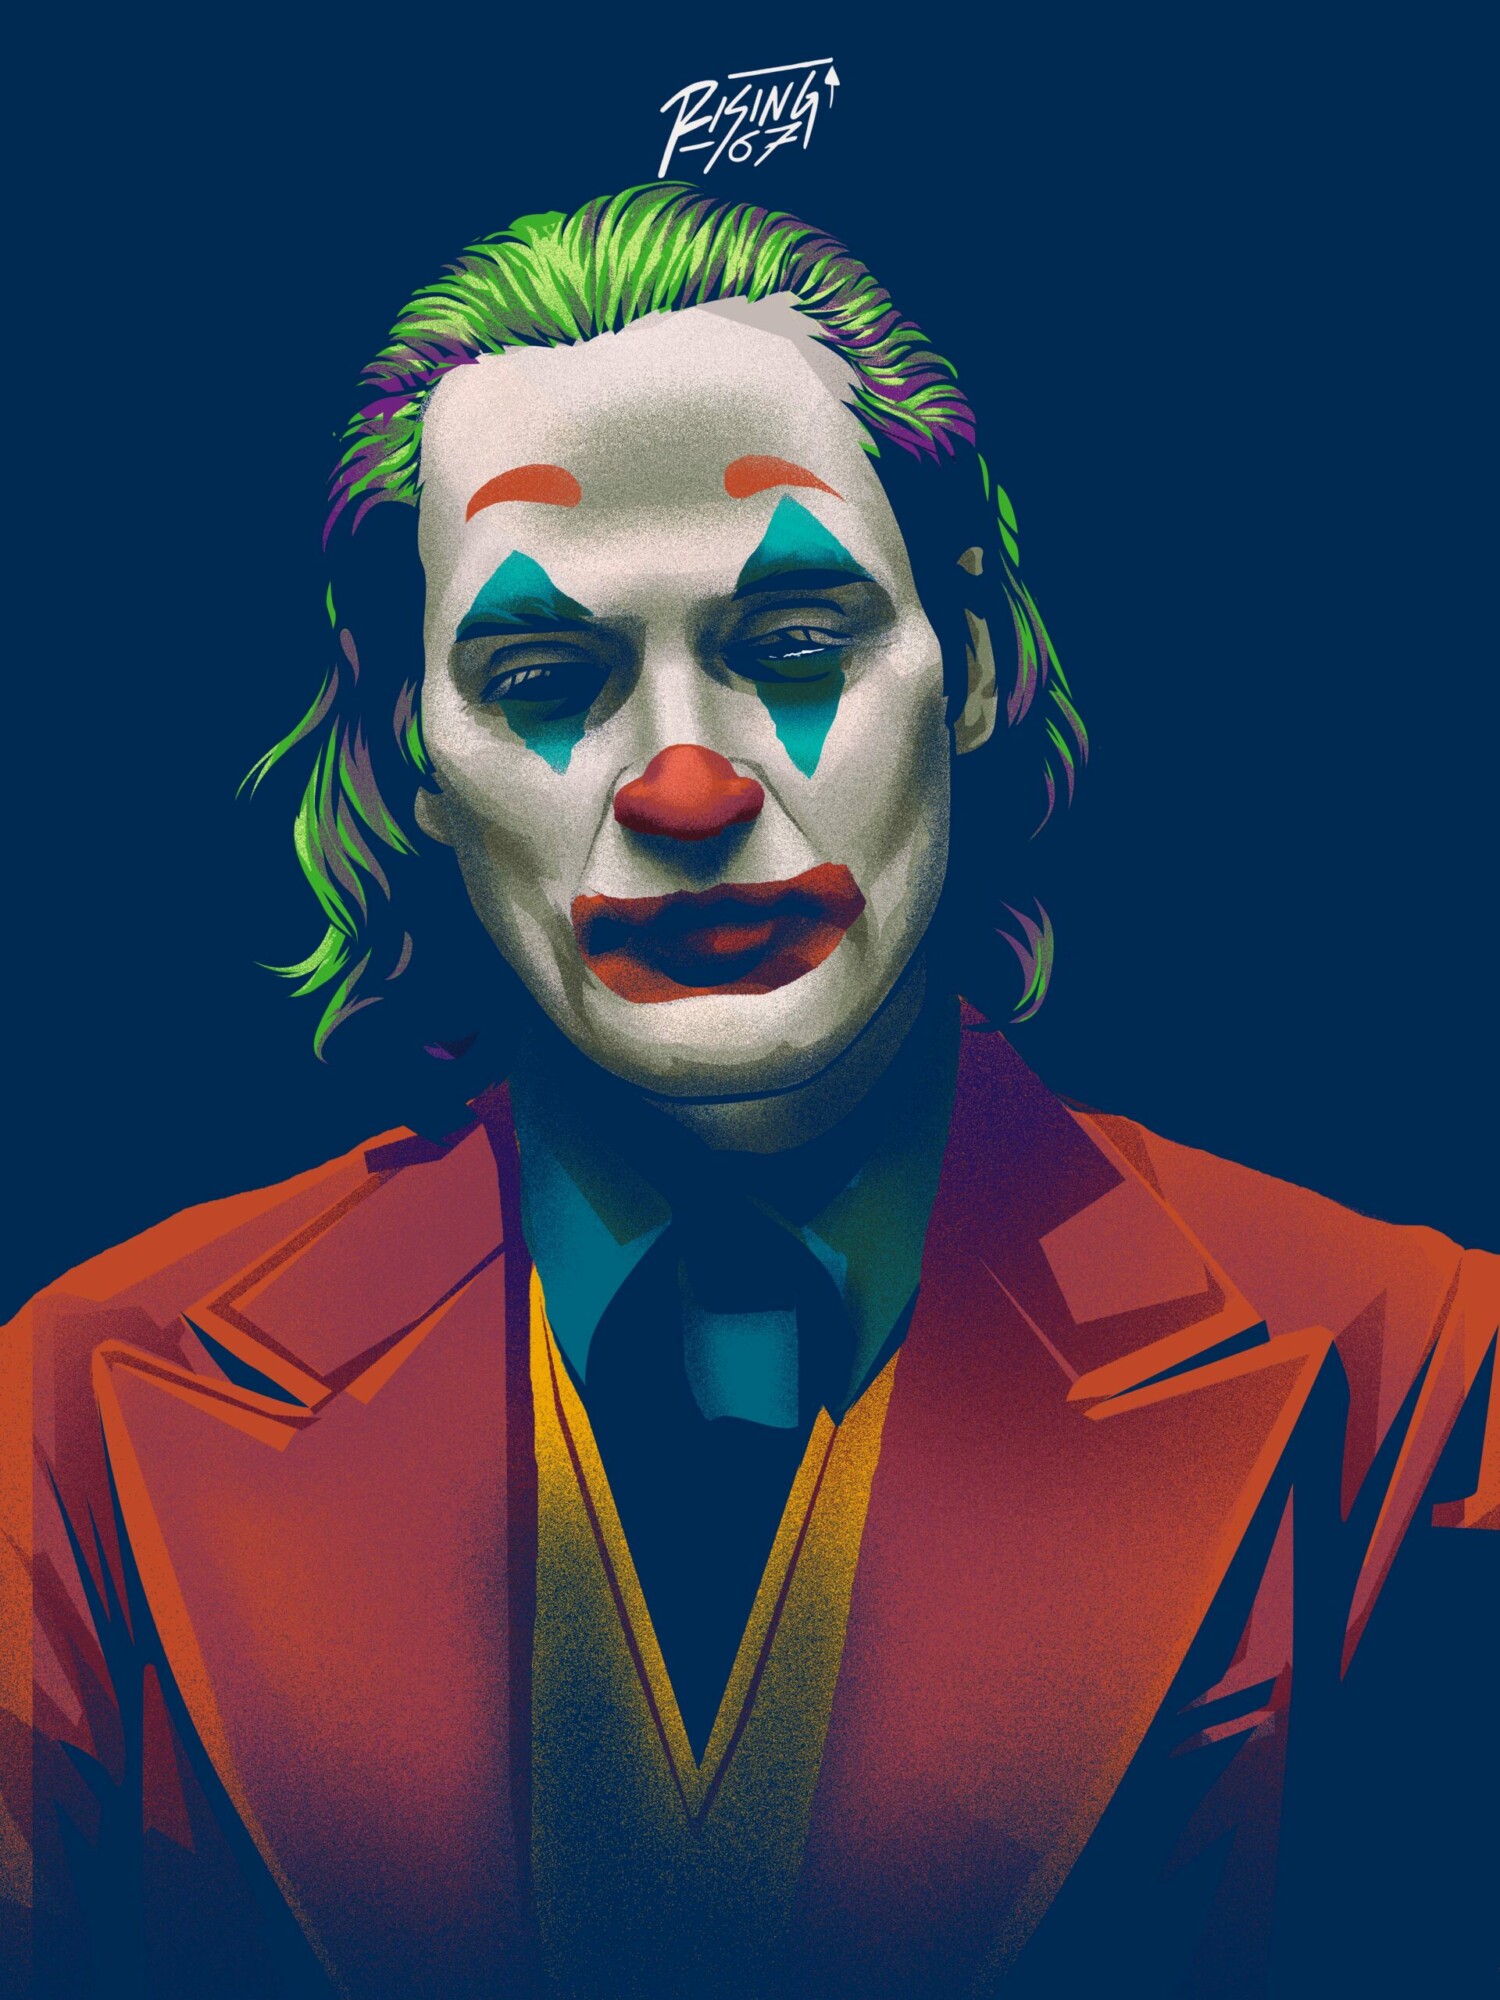 Joker Folie à Deux | Rising67 | PosterSpy